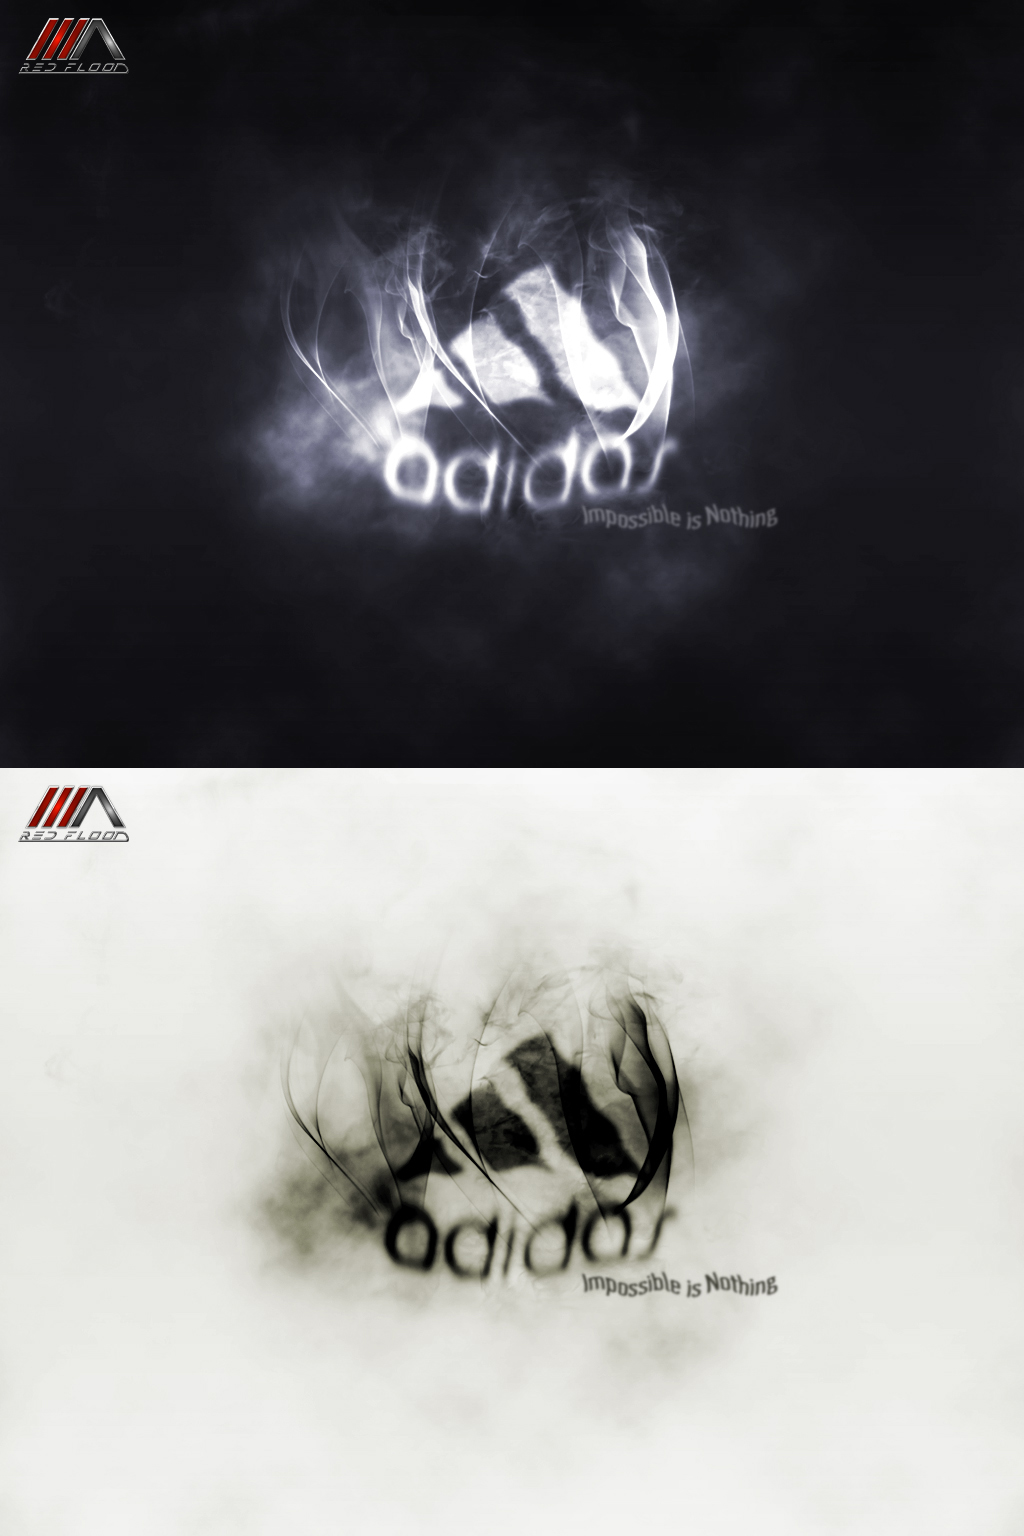 tobacco calorie crystal adidas smoke logo by REDFLOOD on DeviantArt